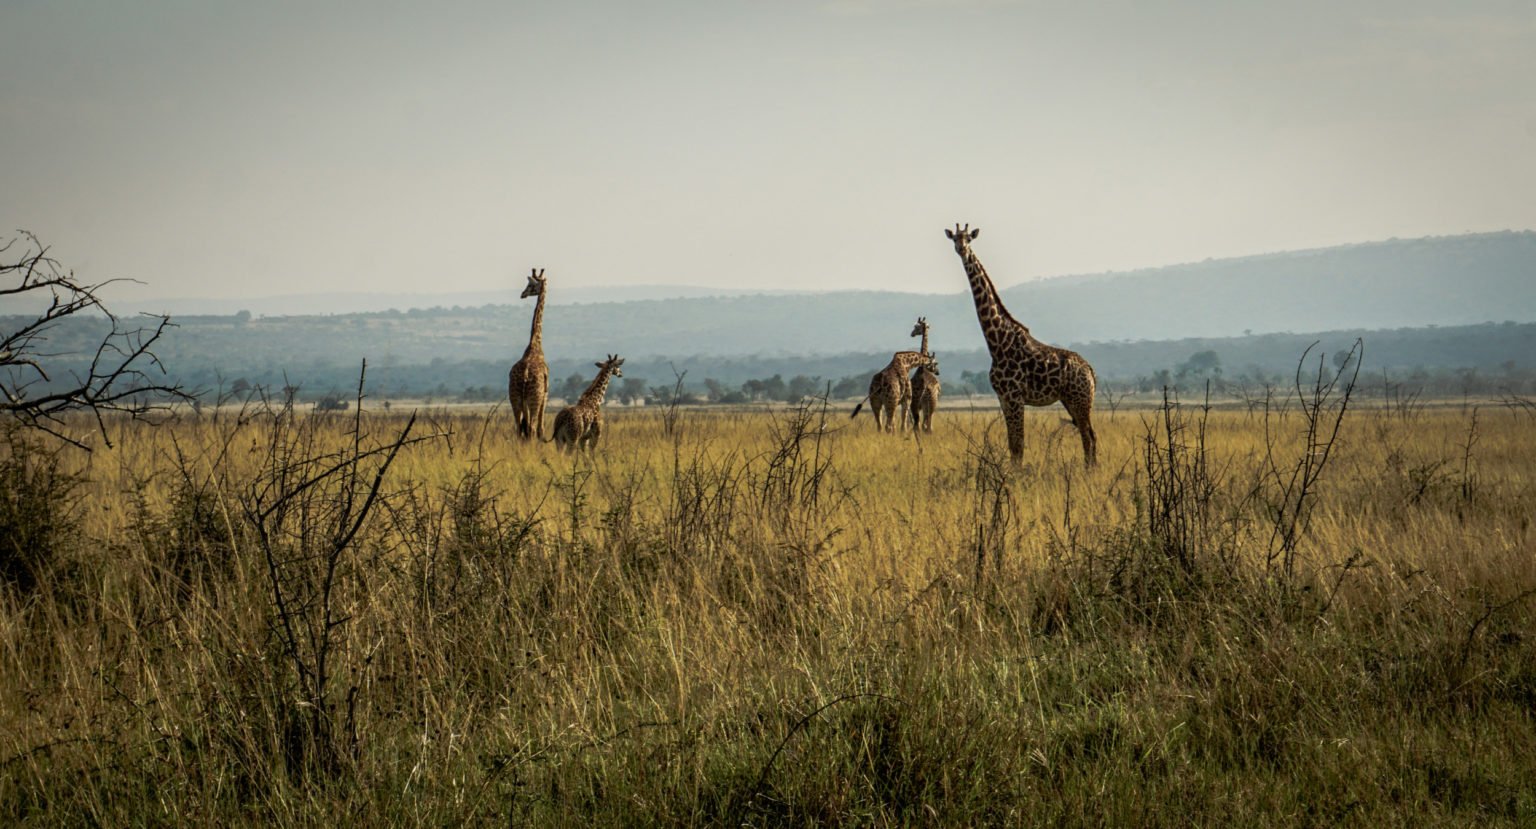 giraffe safari rwanda